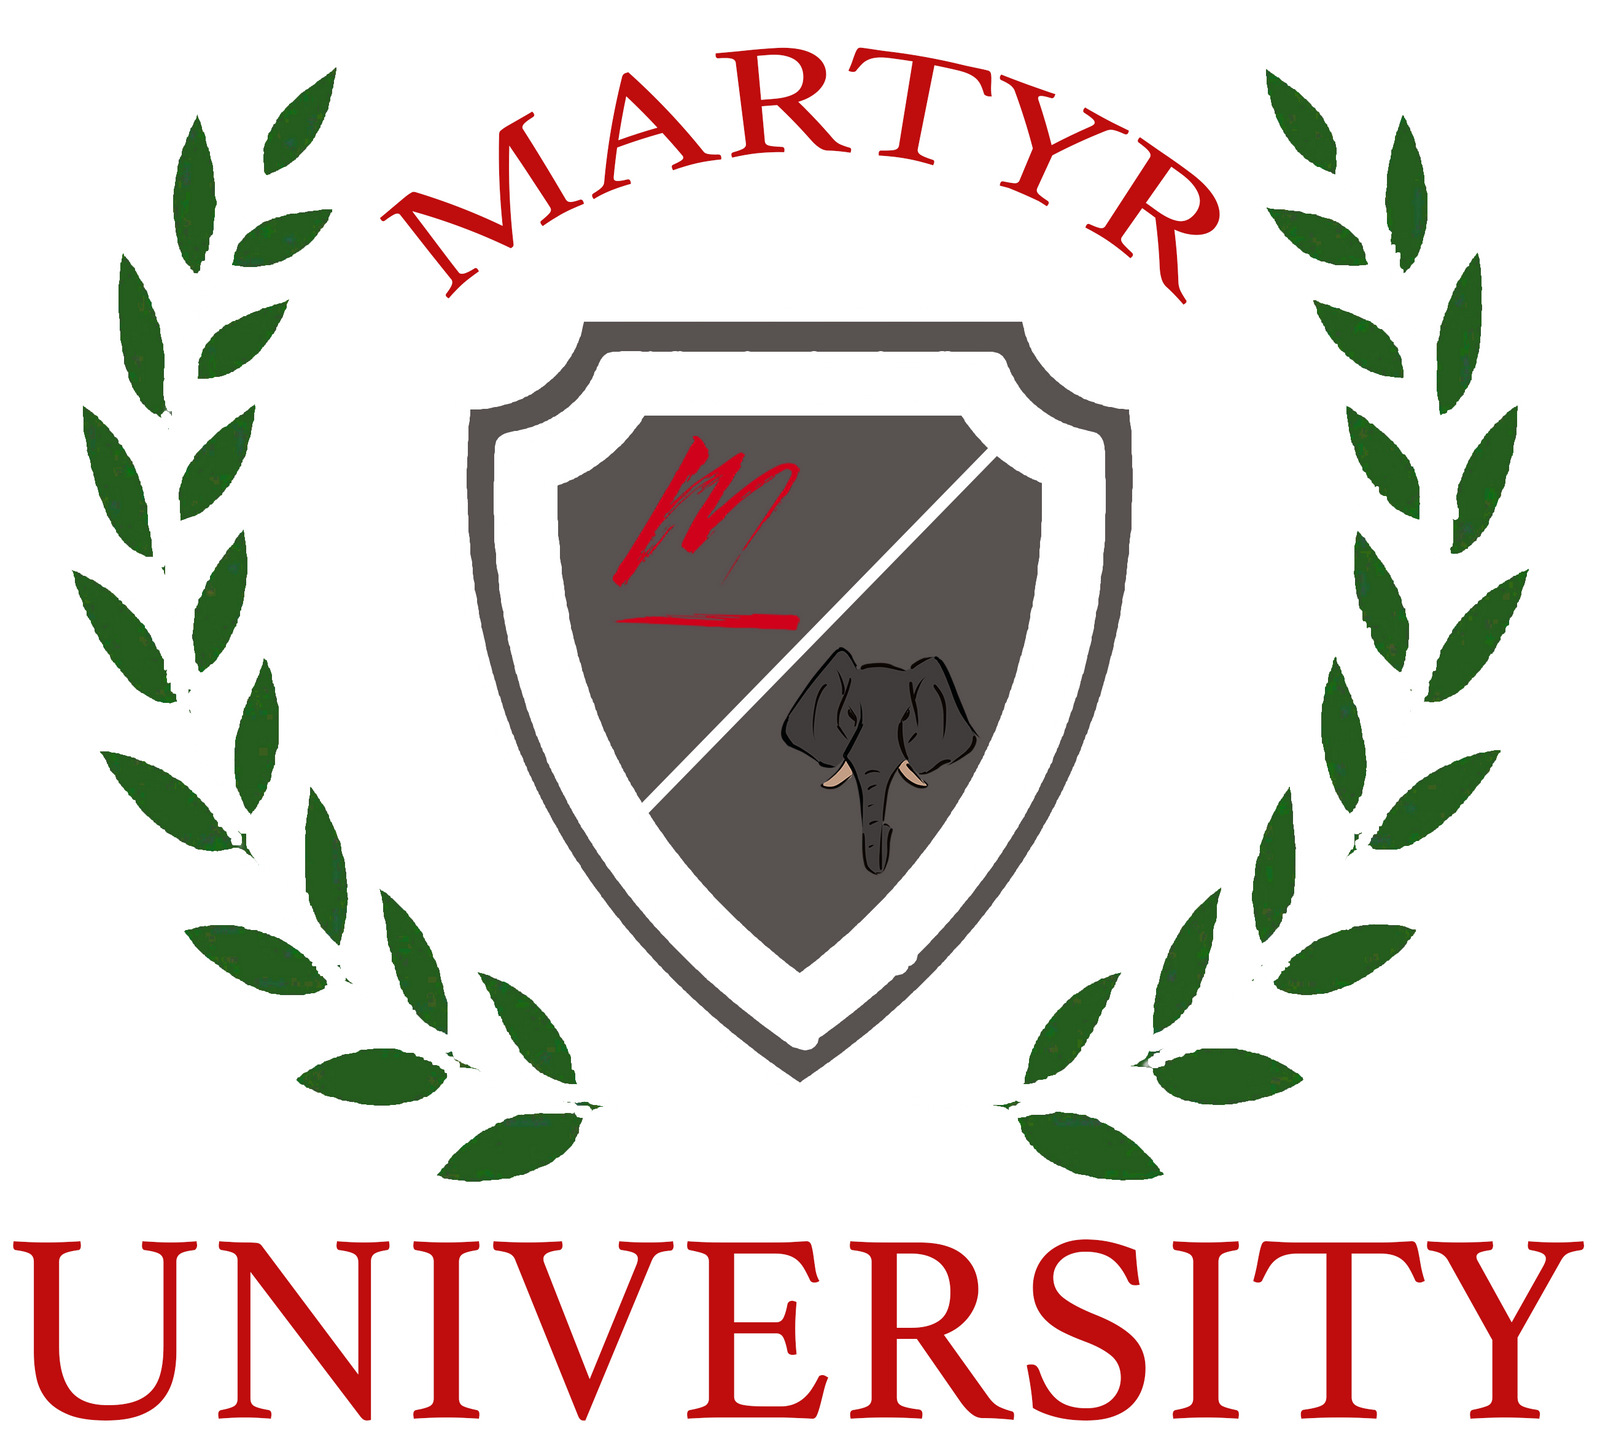 Martyr University